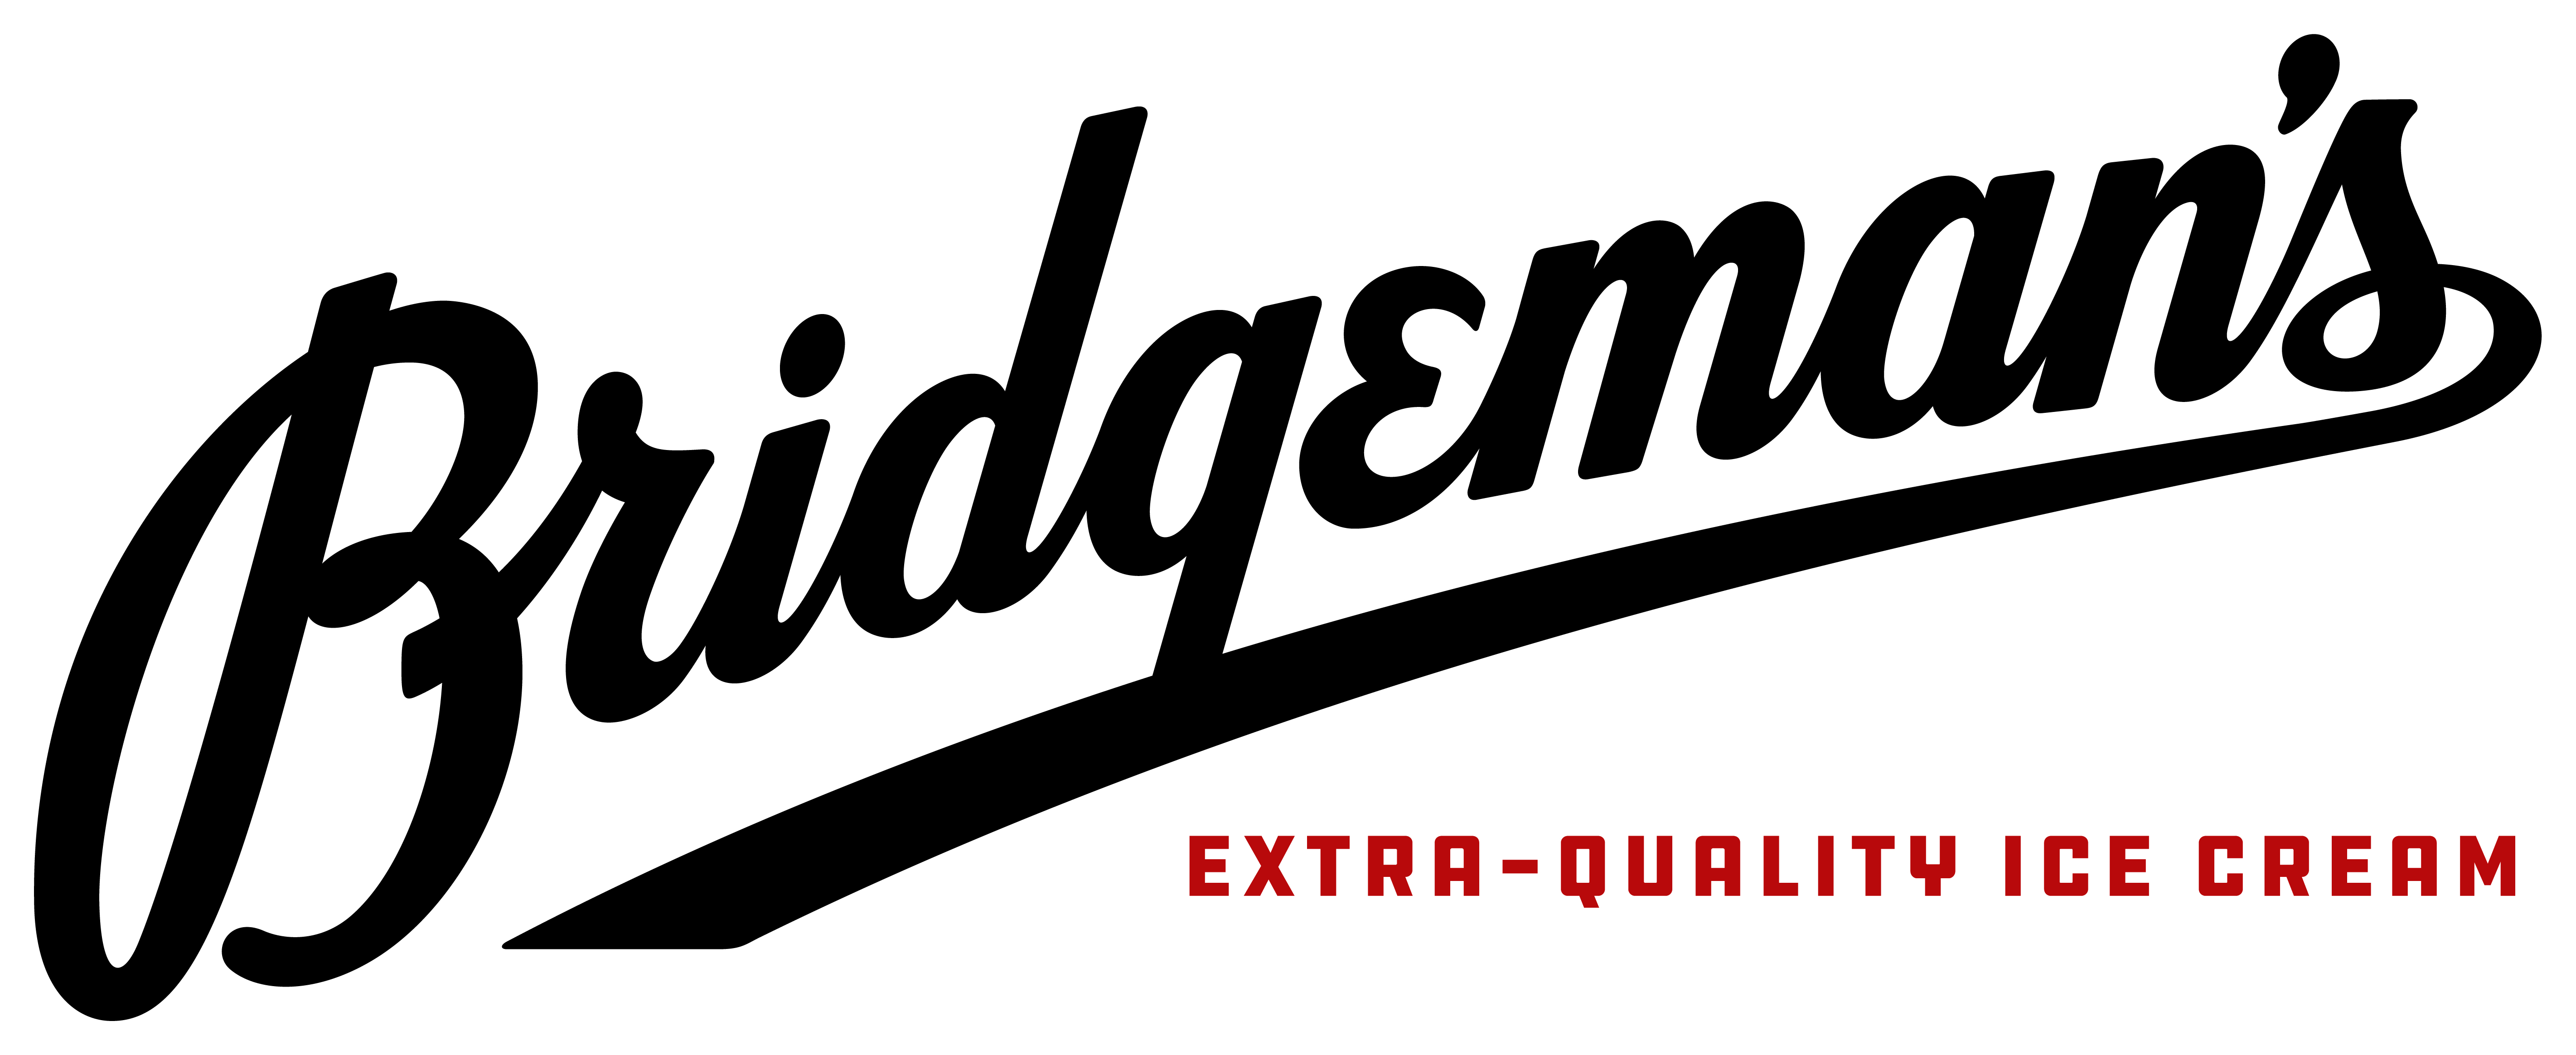 Bridgeman's logo